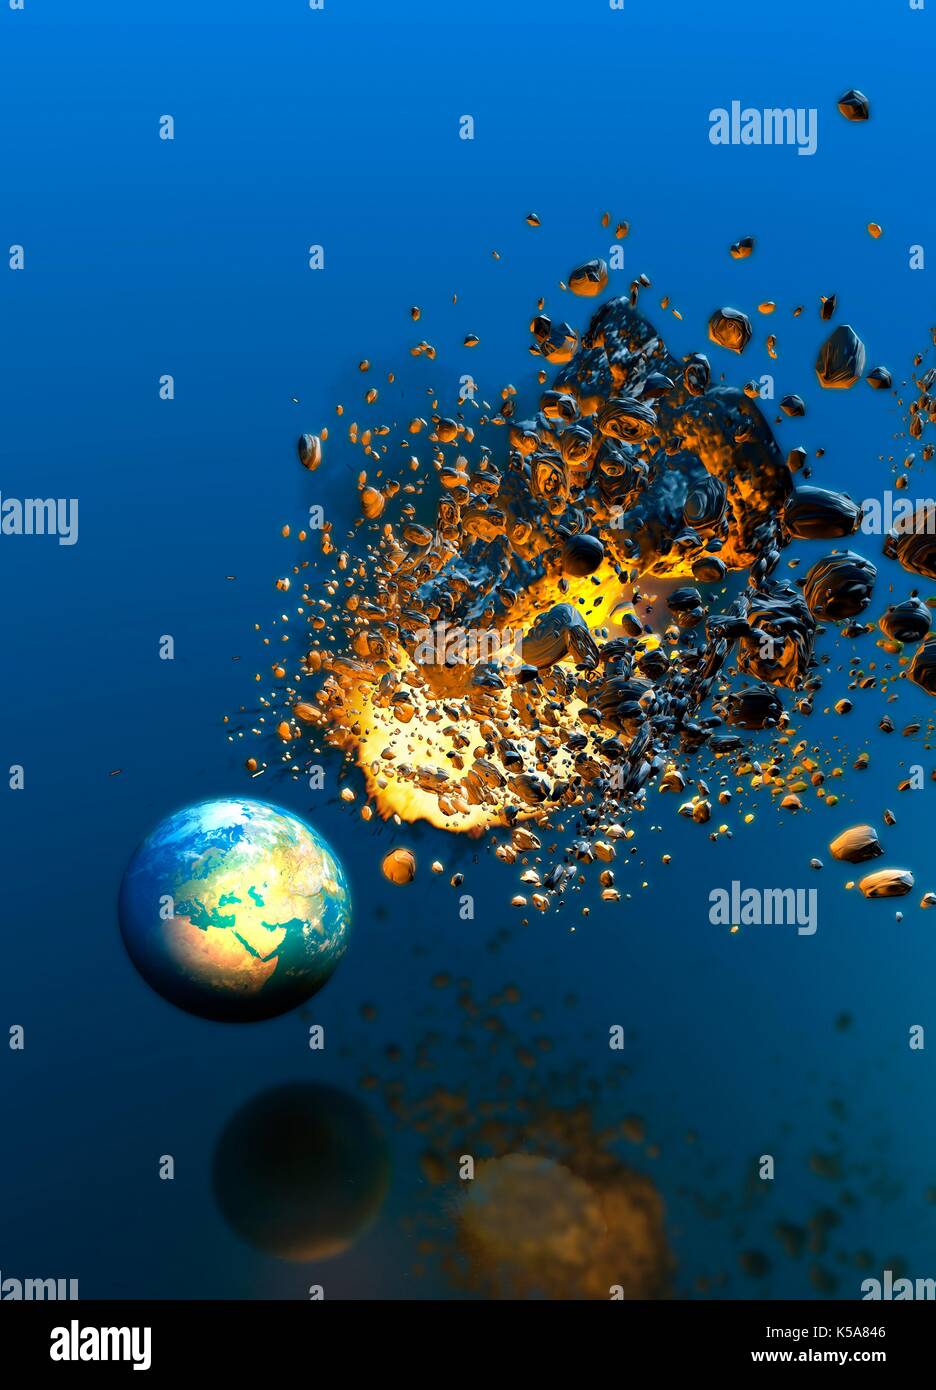 Meteor hitting planet Earth, illustration. Stock Photo